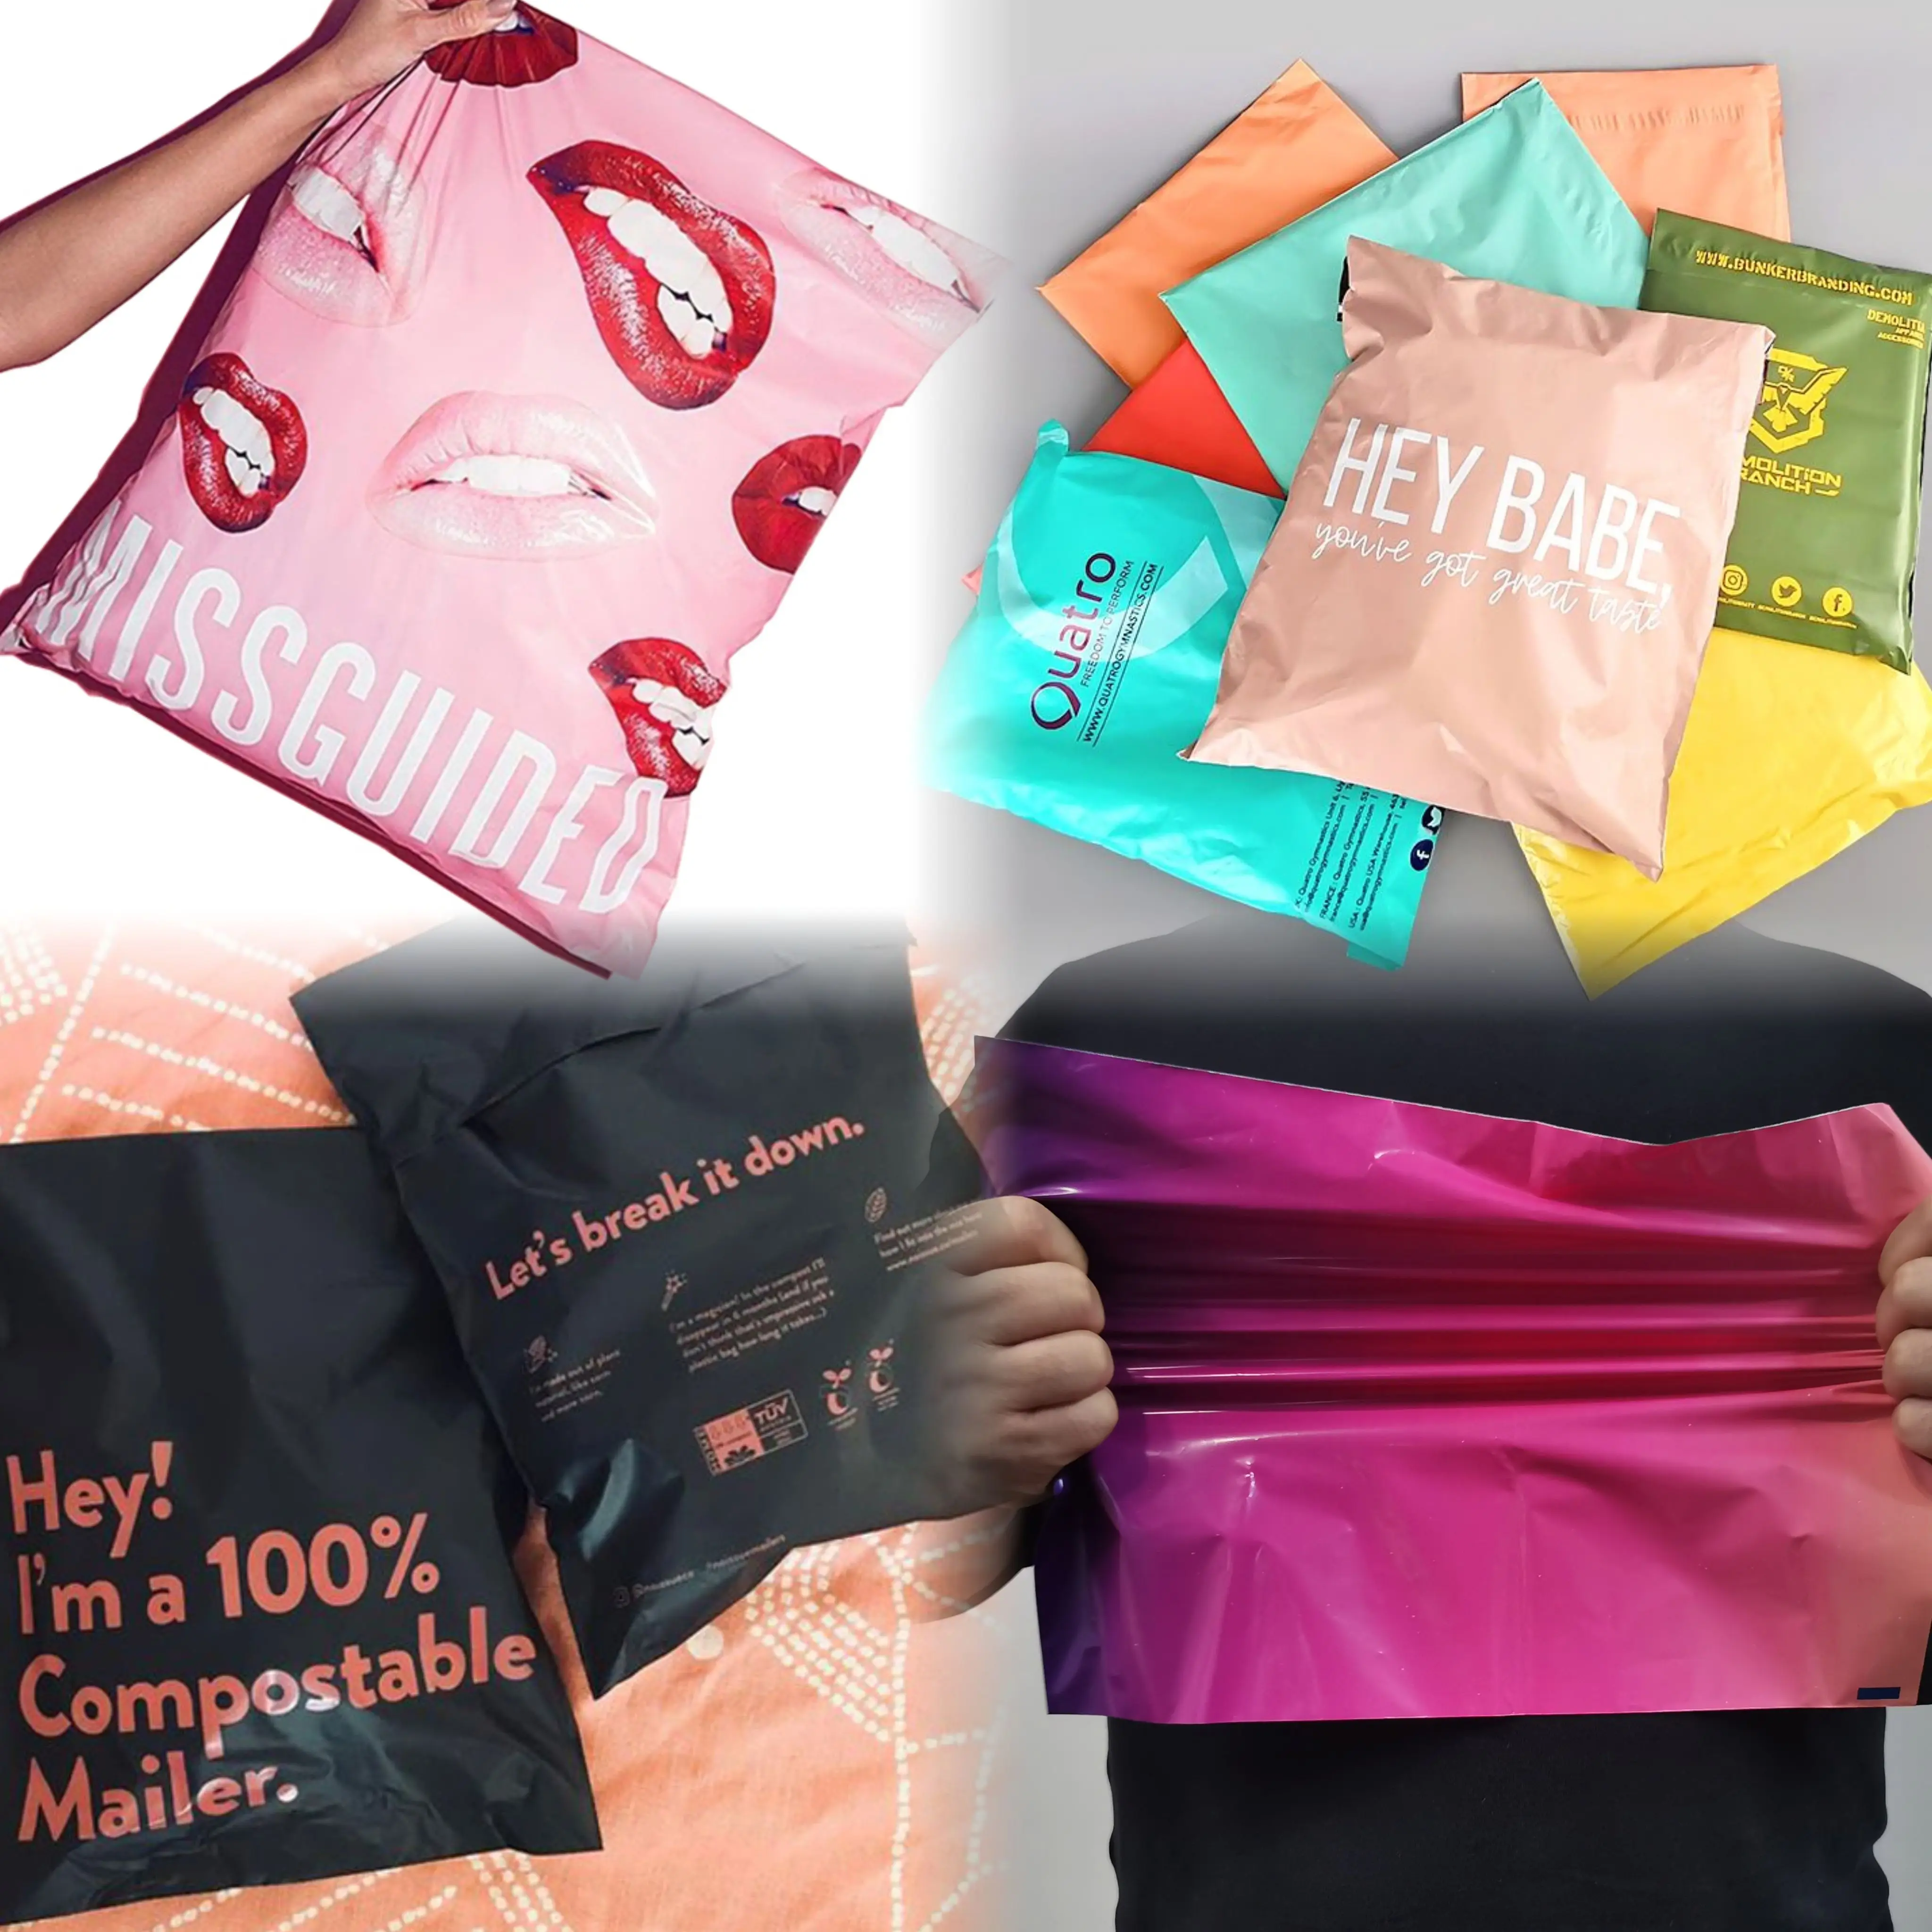 Custom Printed Shipping Bags | Branded E-Commerce Packaging